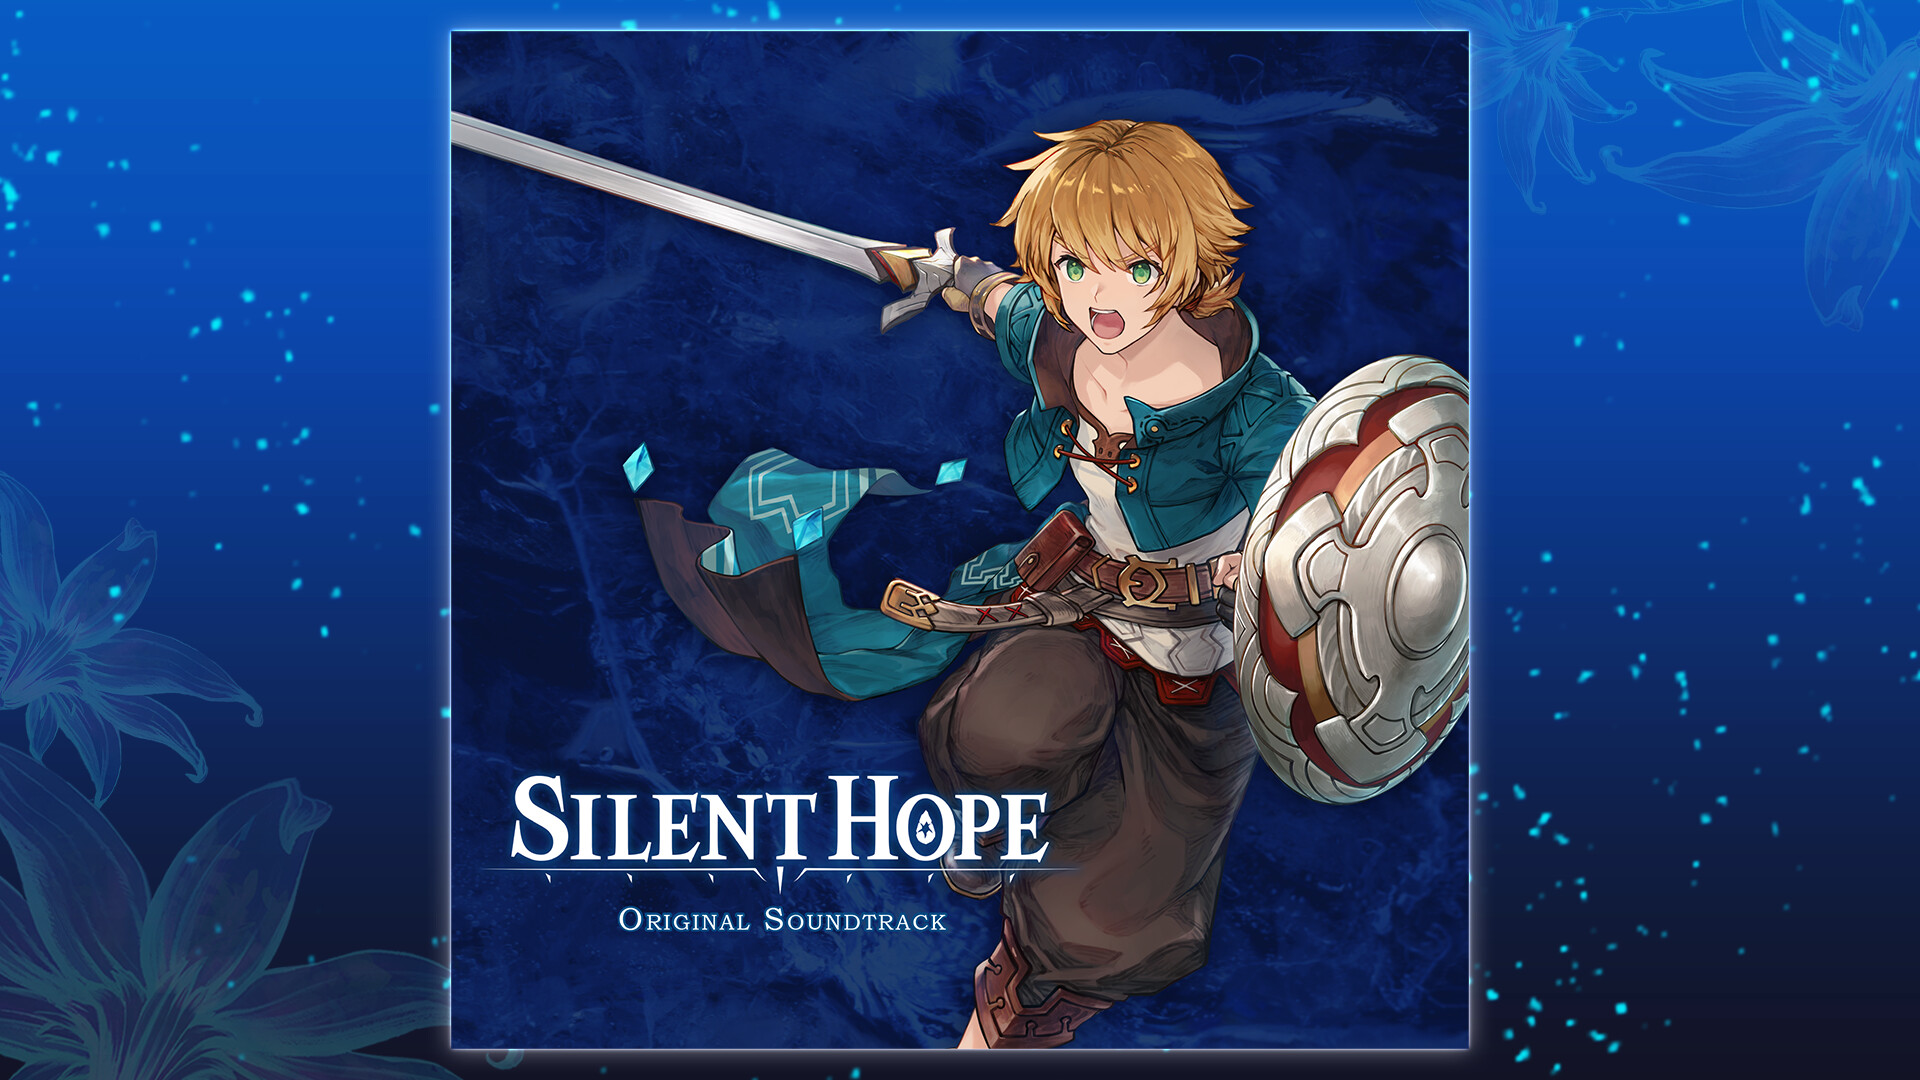 Silent Hope - Original Soundtrack Featured Screenshot #1